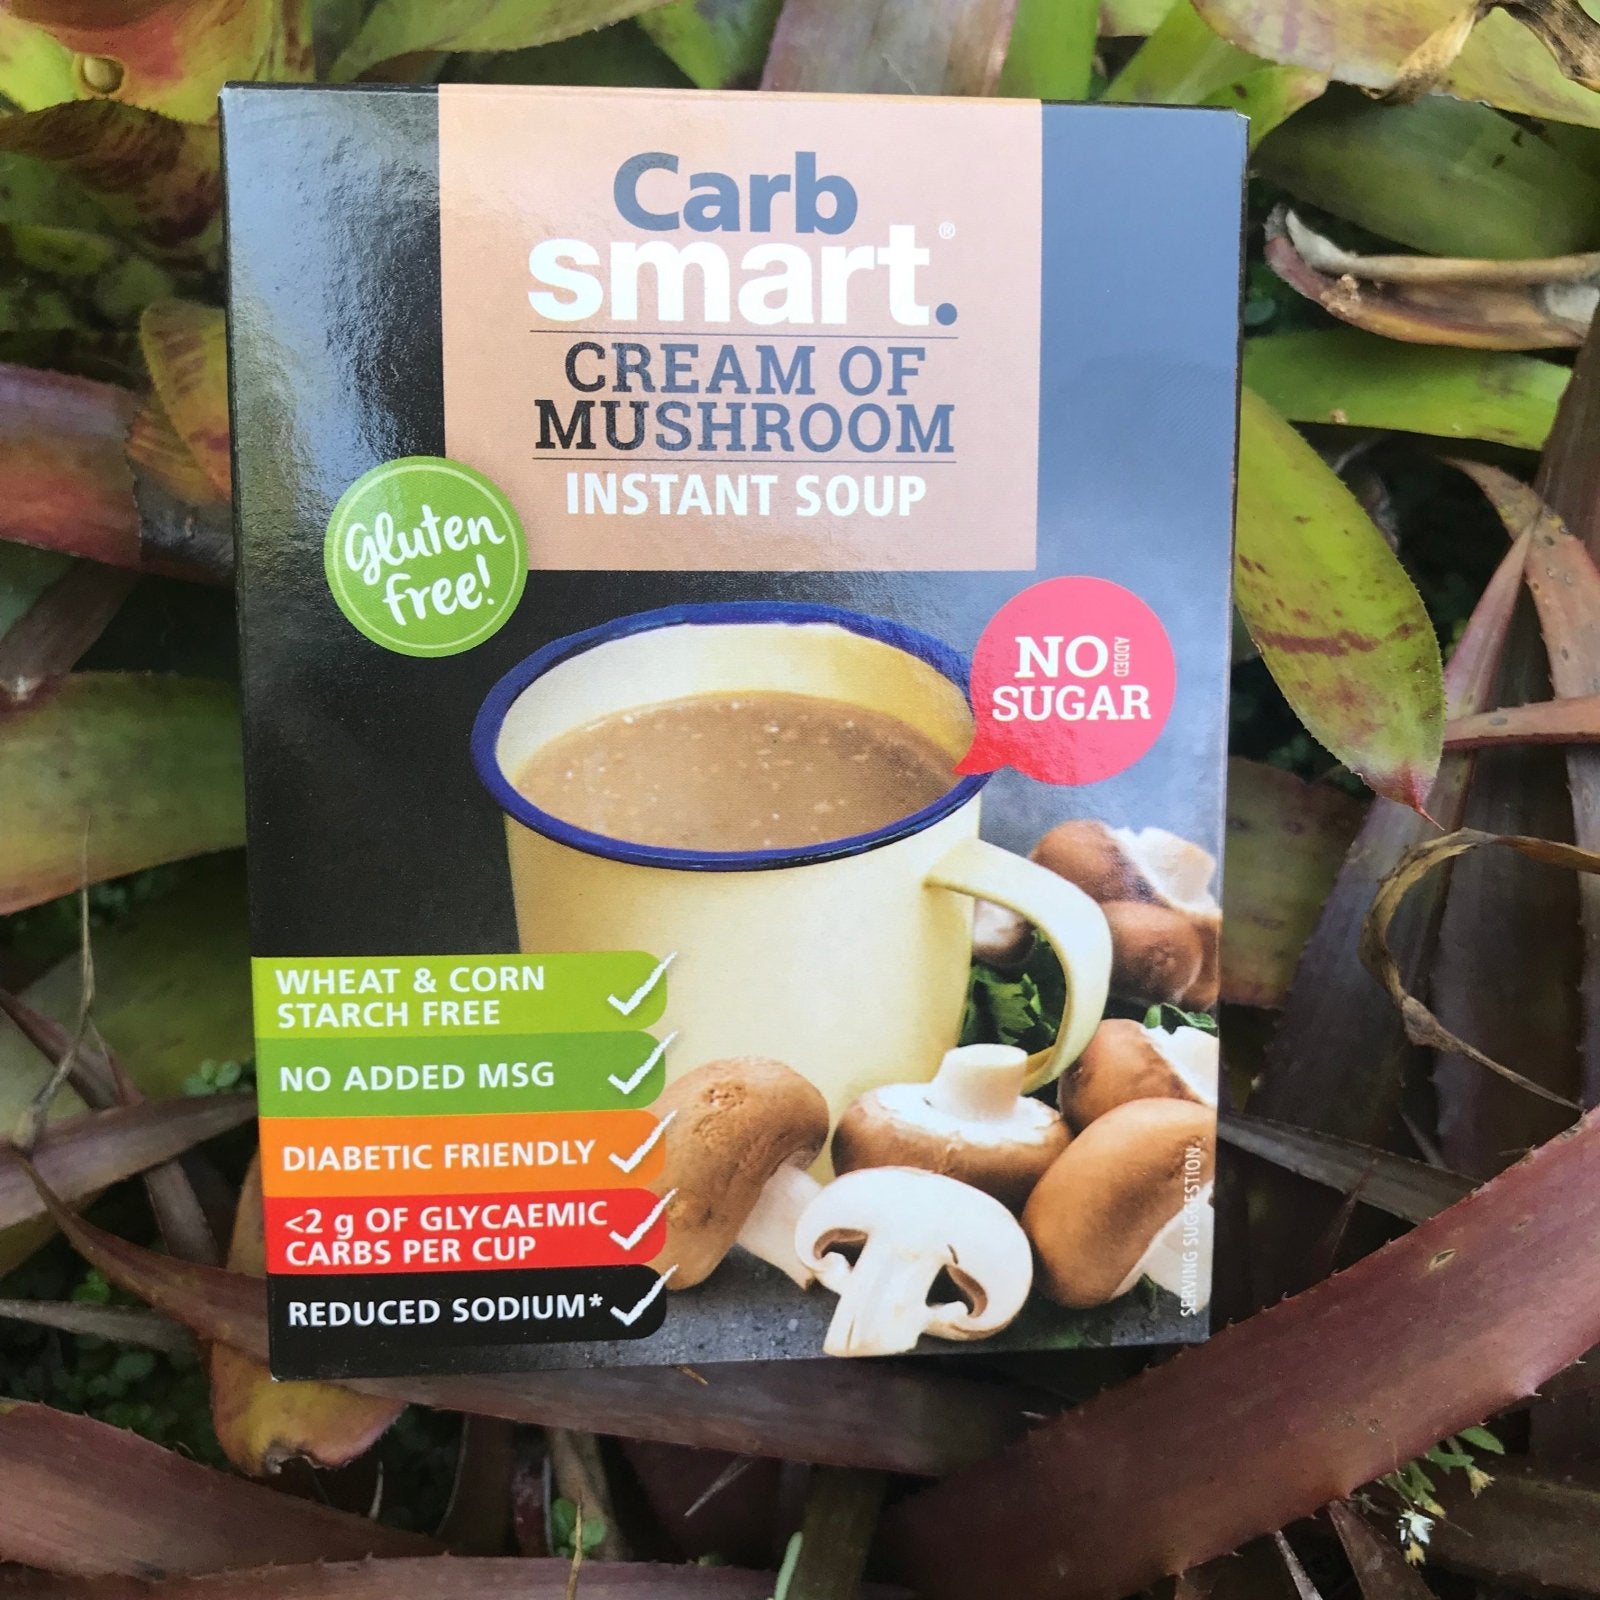 Carb Smart Cream of Mushroom Instant Soup (4x17g) - The Deli